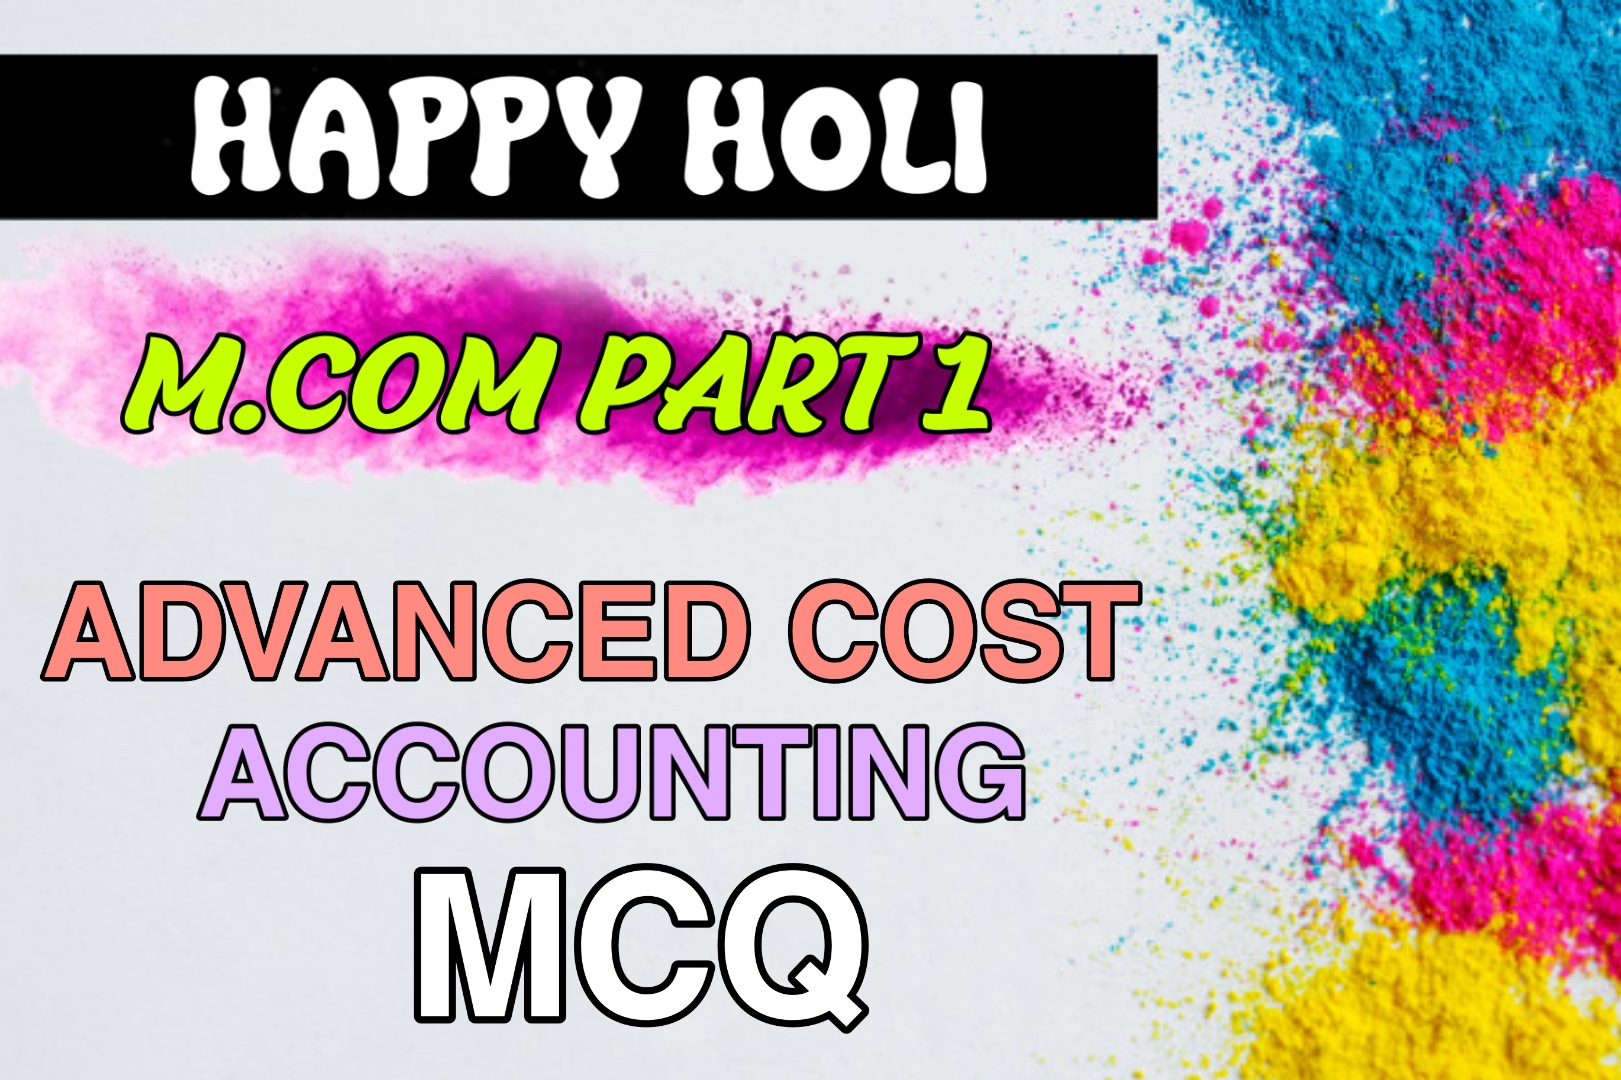 M.com Part 1 Advance Cost Accounting MCQ